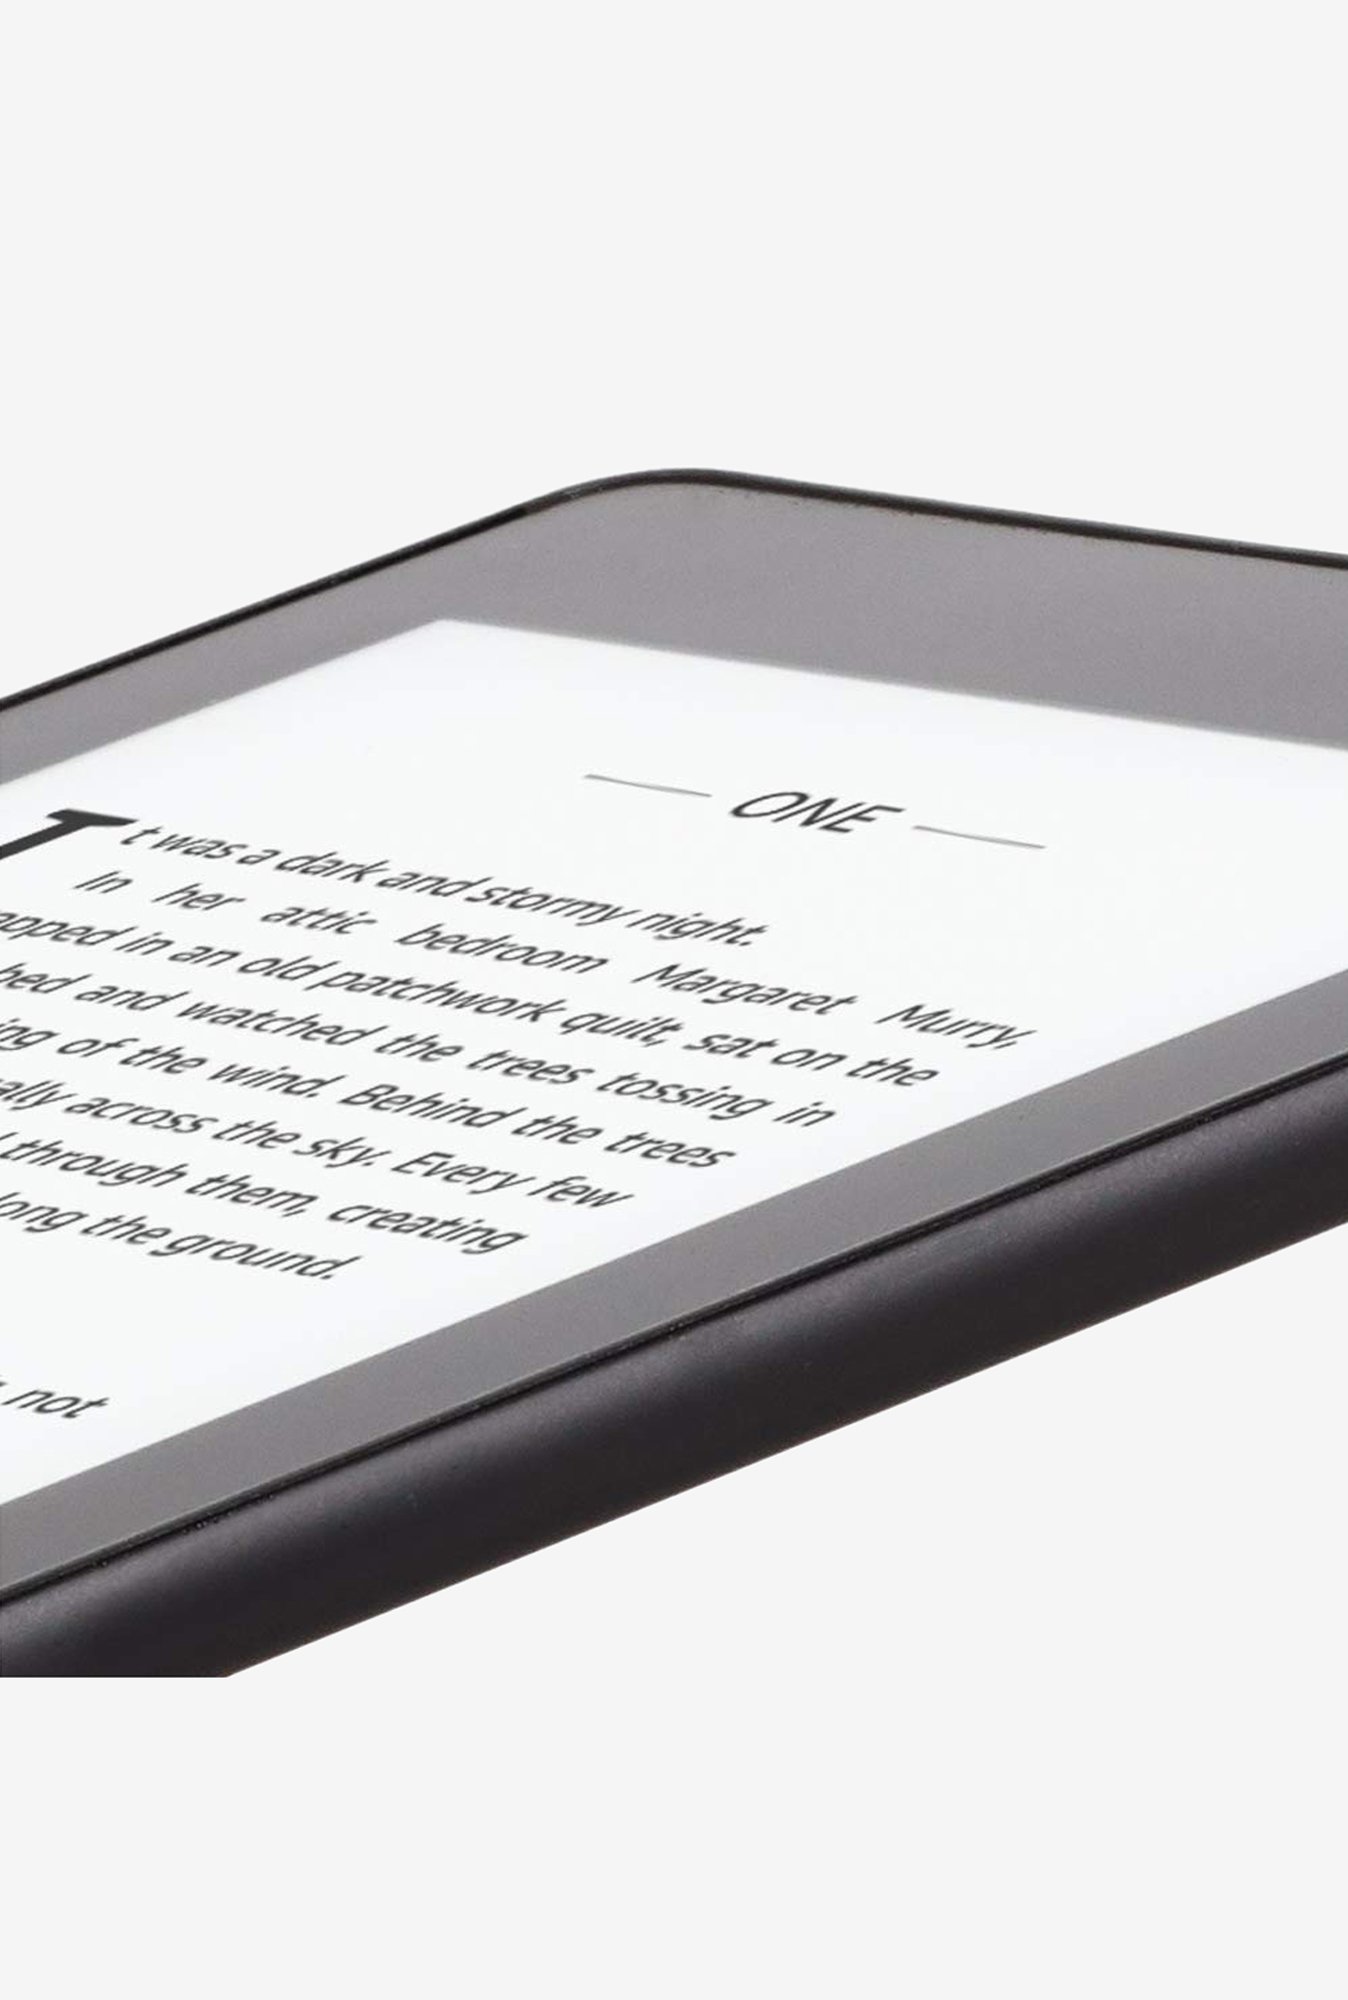 Buy Amazon Kindle Paperwhite 10th Gen 8 GB Wi-Fi E-Reader (Black 